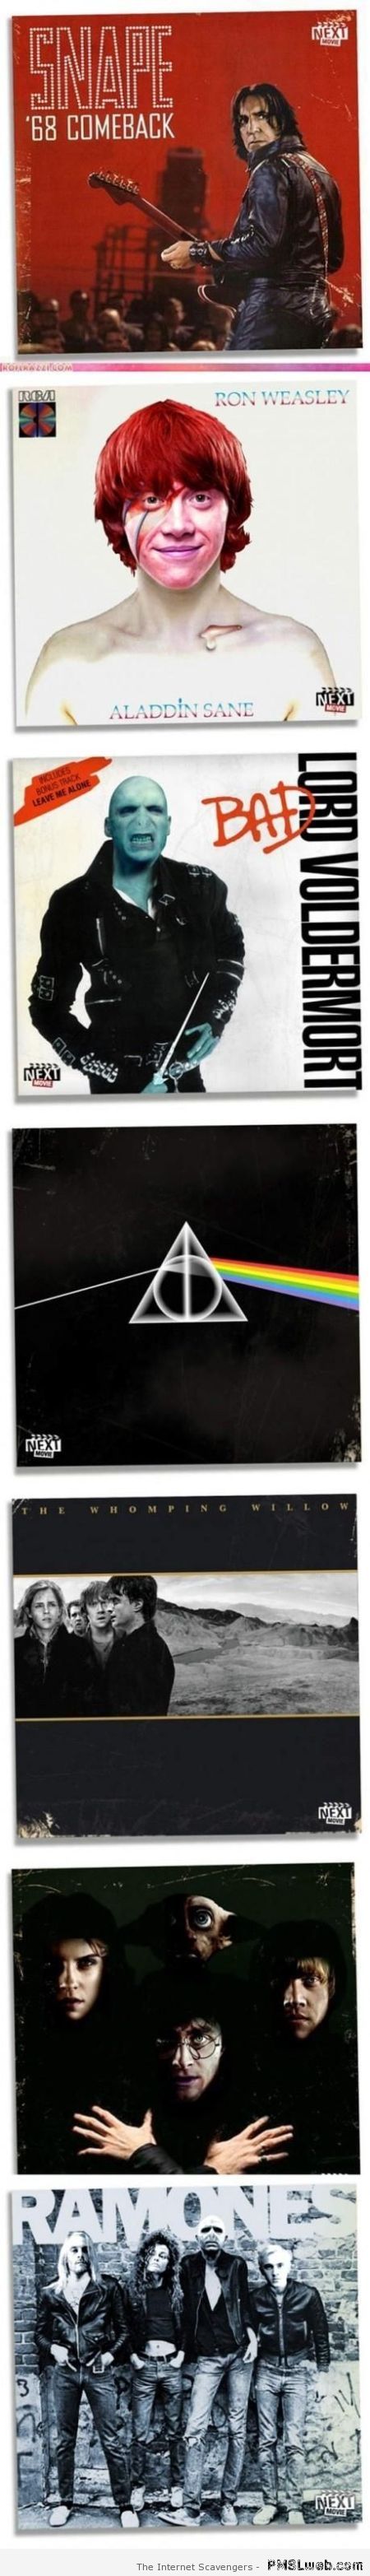 Harry Potter funny album cover parodies at PMSLweb.com